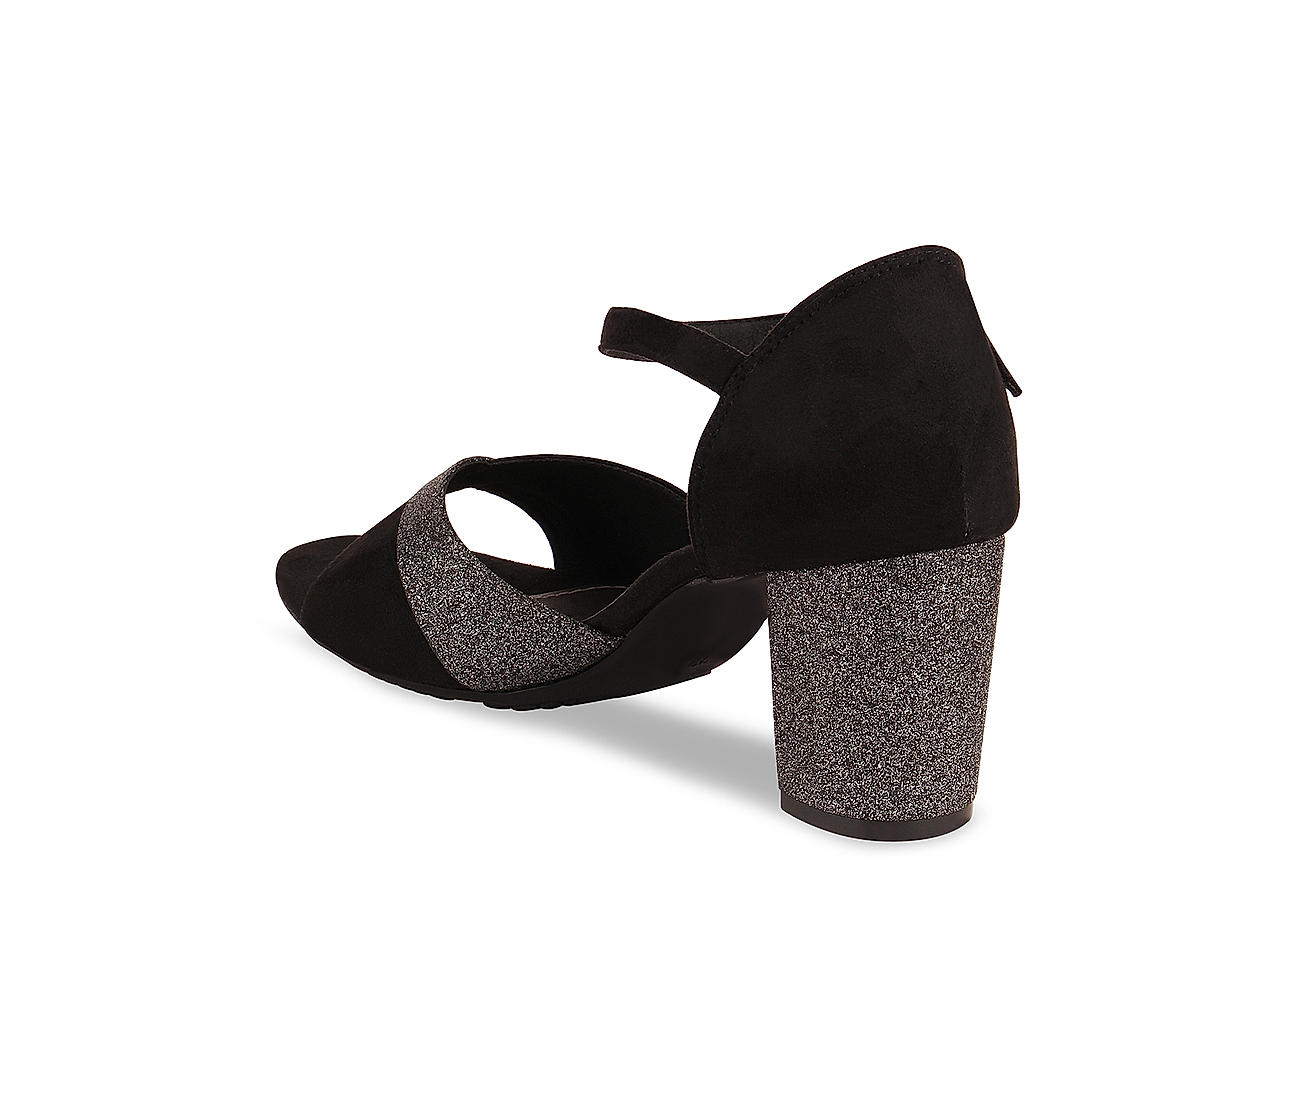 Black Glitter Shoes Peep Toe Block Heel Sandals with Platform|FSJshoes